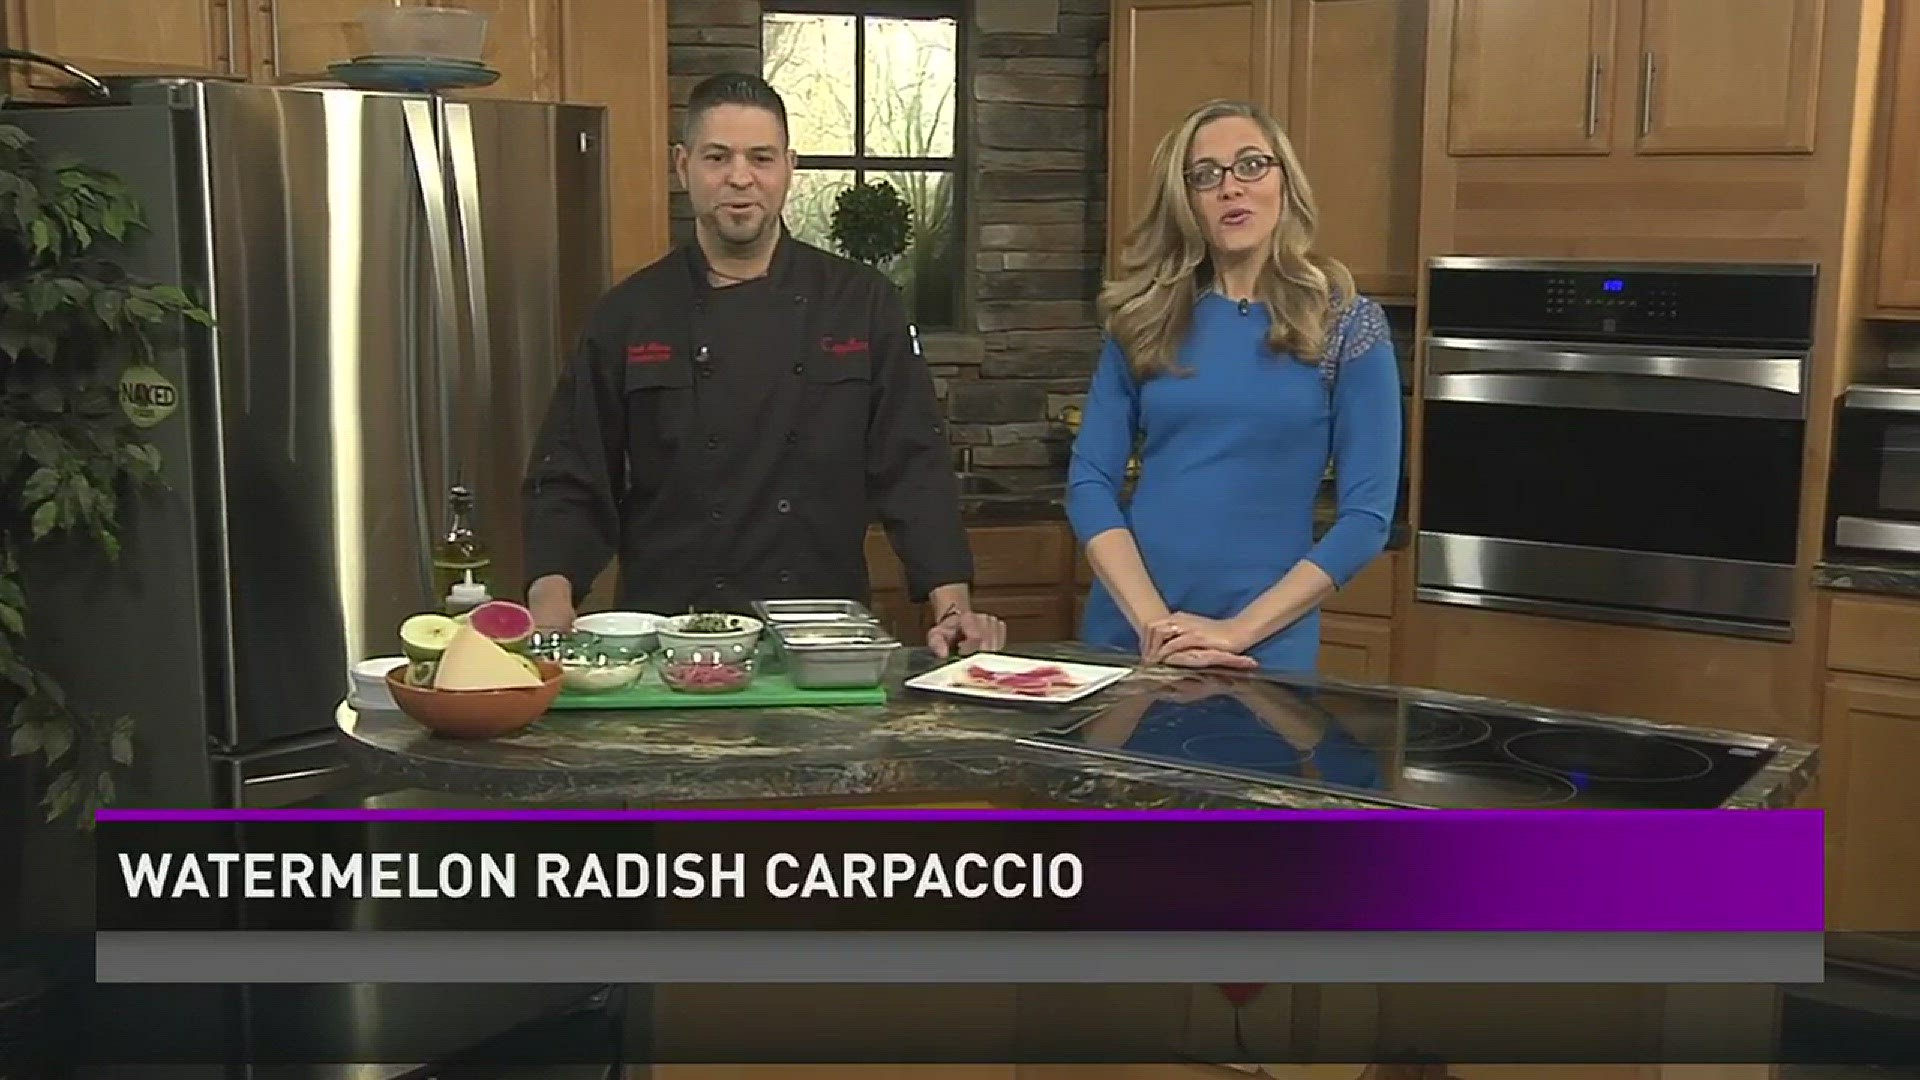 Chef Frank Aloise from Cappuccino's shows how to make watermelon radish carpaccio.